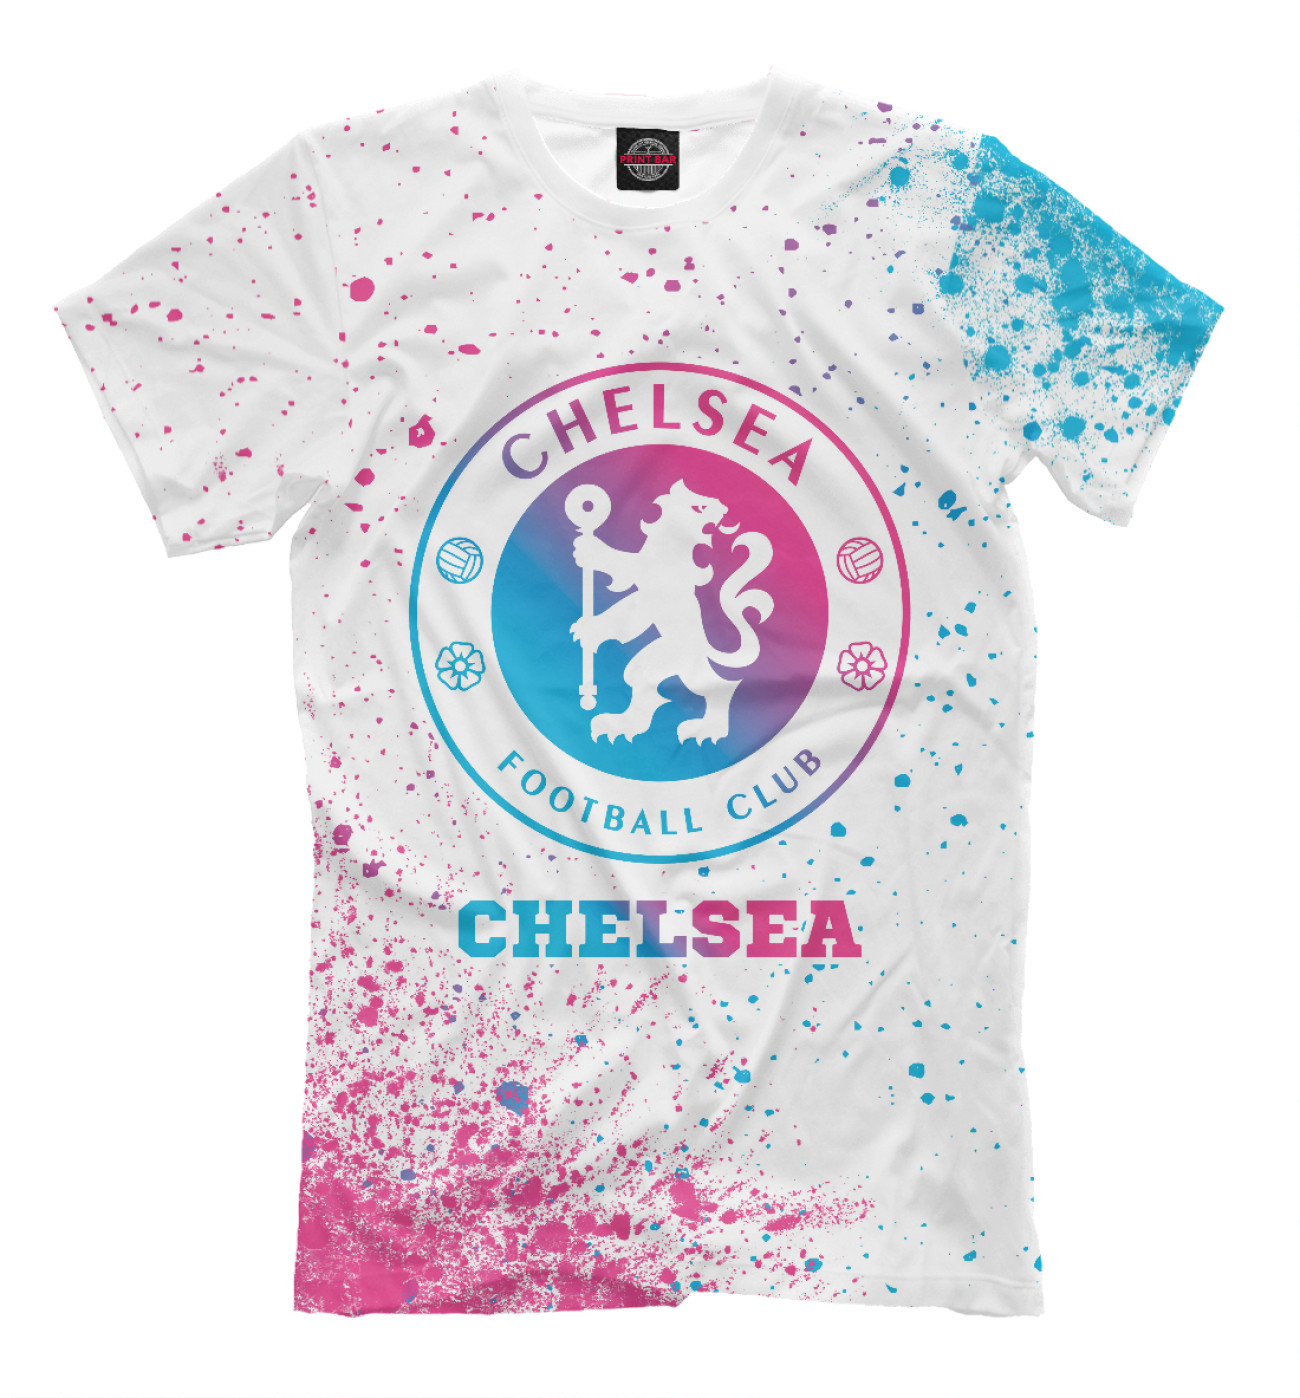 Мужская Футболка Chelsea Neon Gradient (цветные брызги), артикул: CHL-323541-fut-2